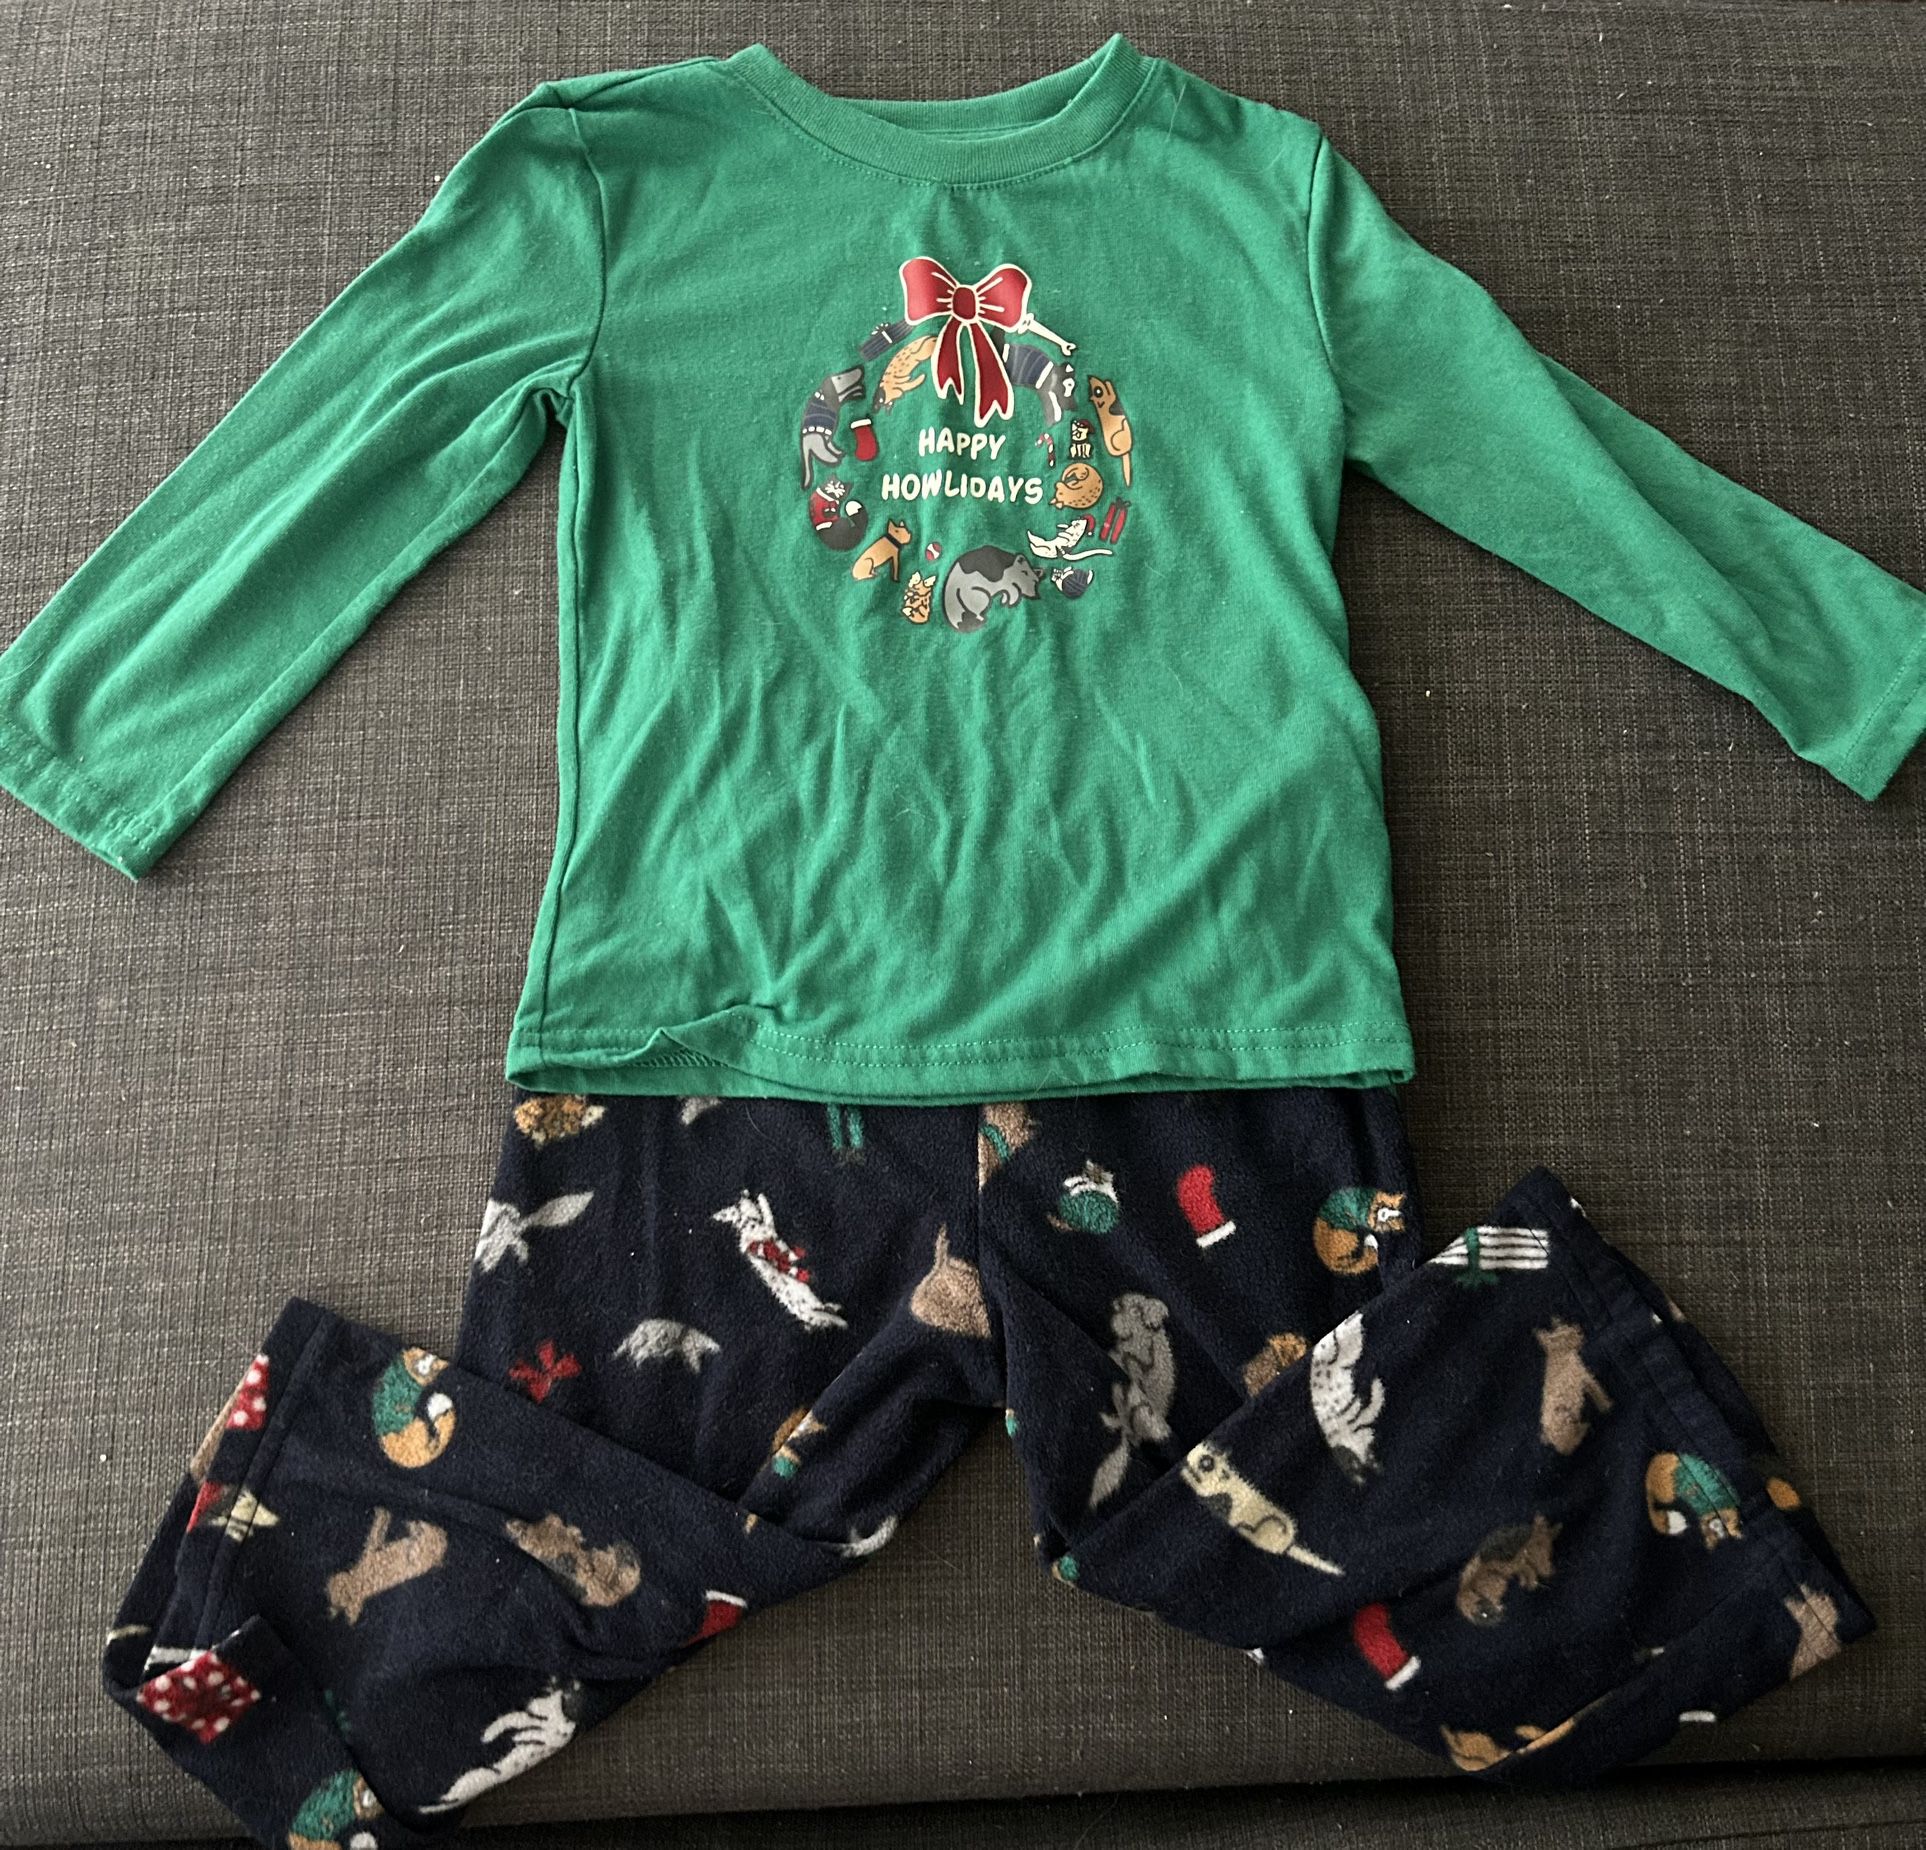 Fleece Boys Pajama Set - Size 2T 